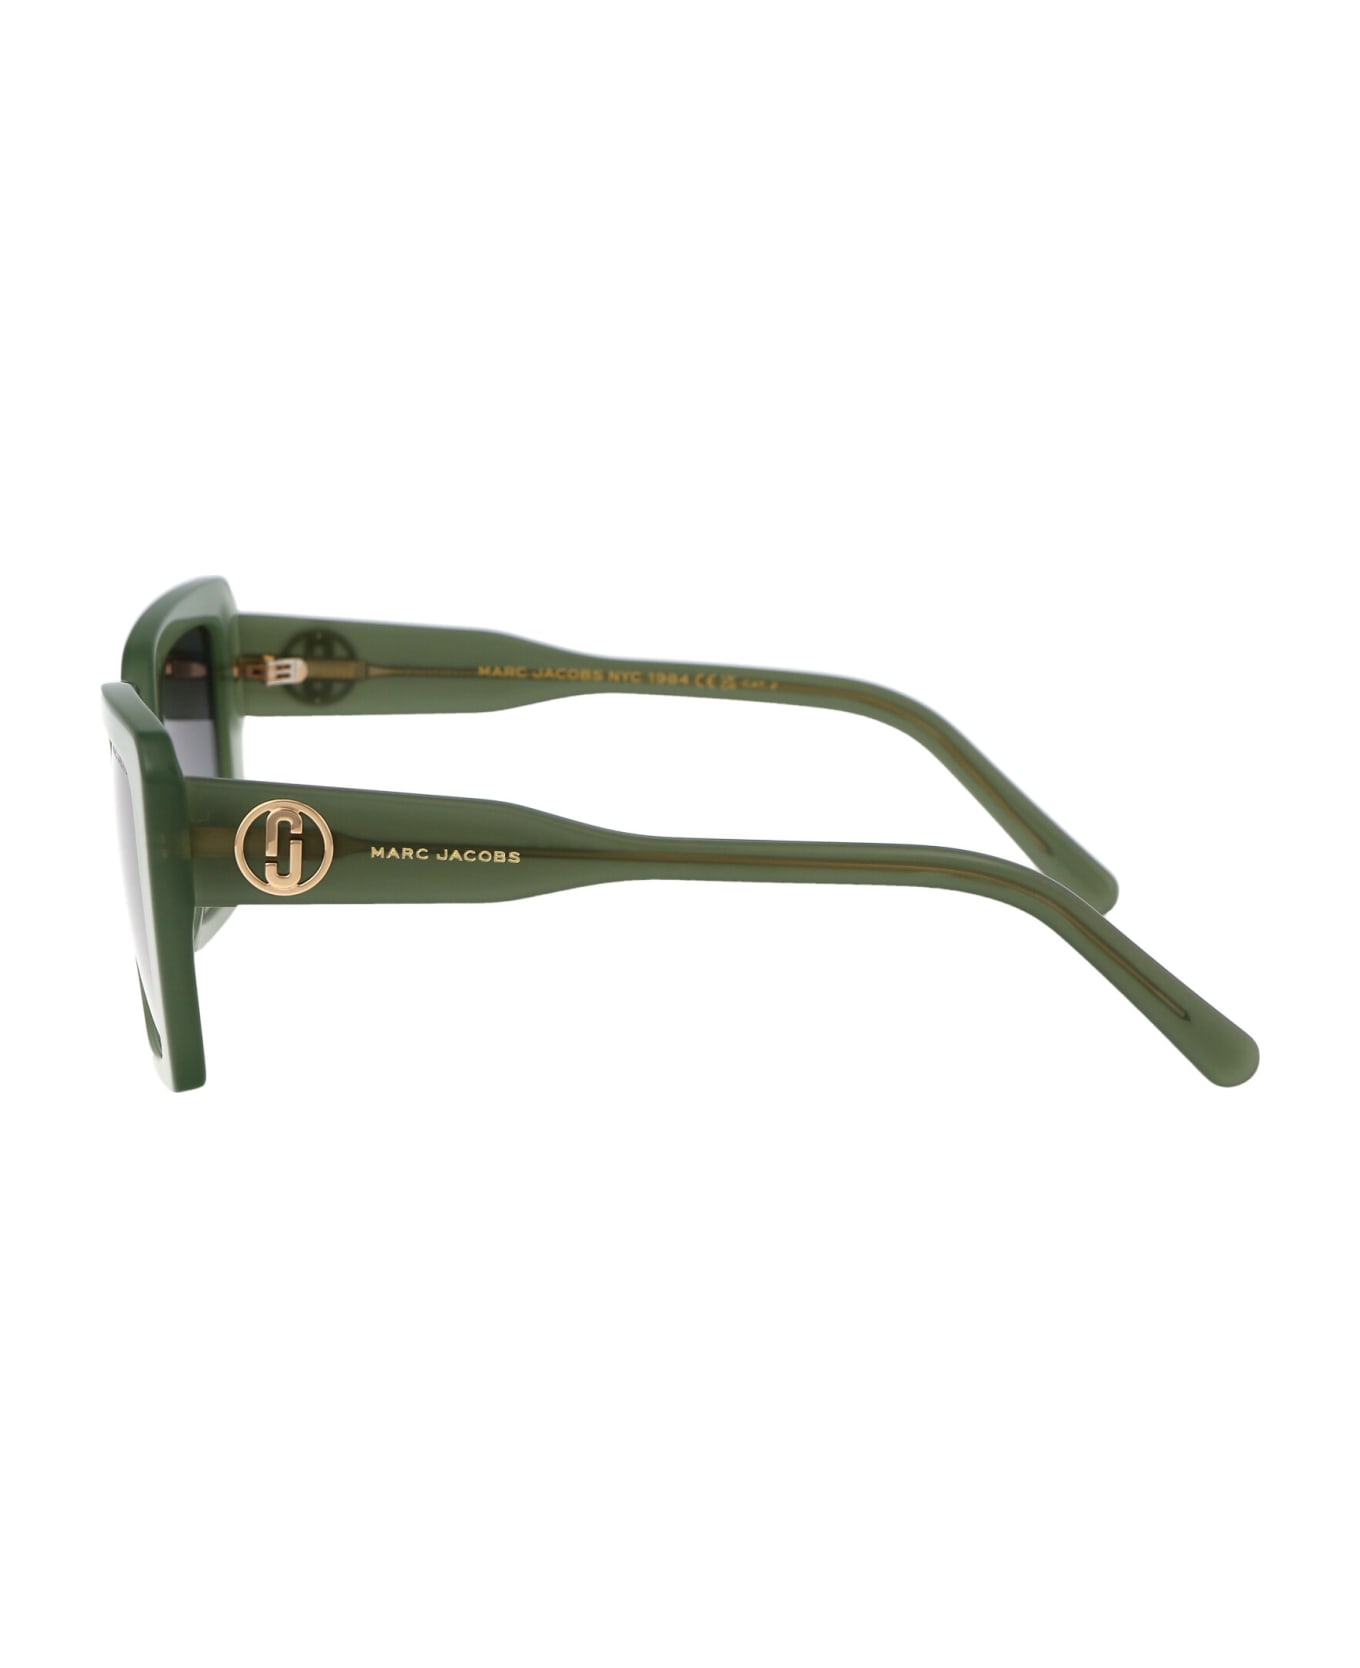 Marc Jacobs Eyewear Marc 733/s Sunglasses - 1EDGB GREEN